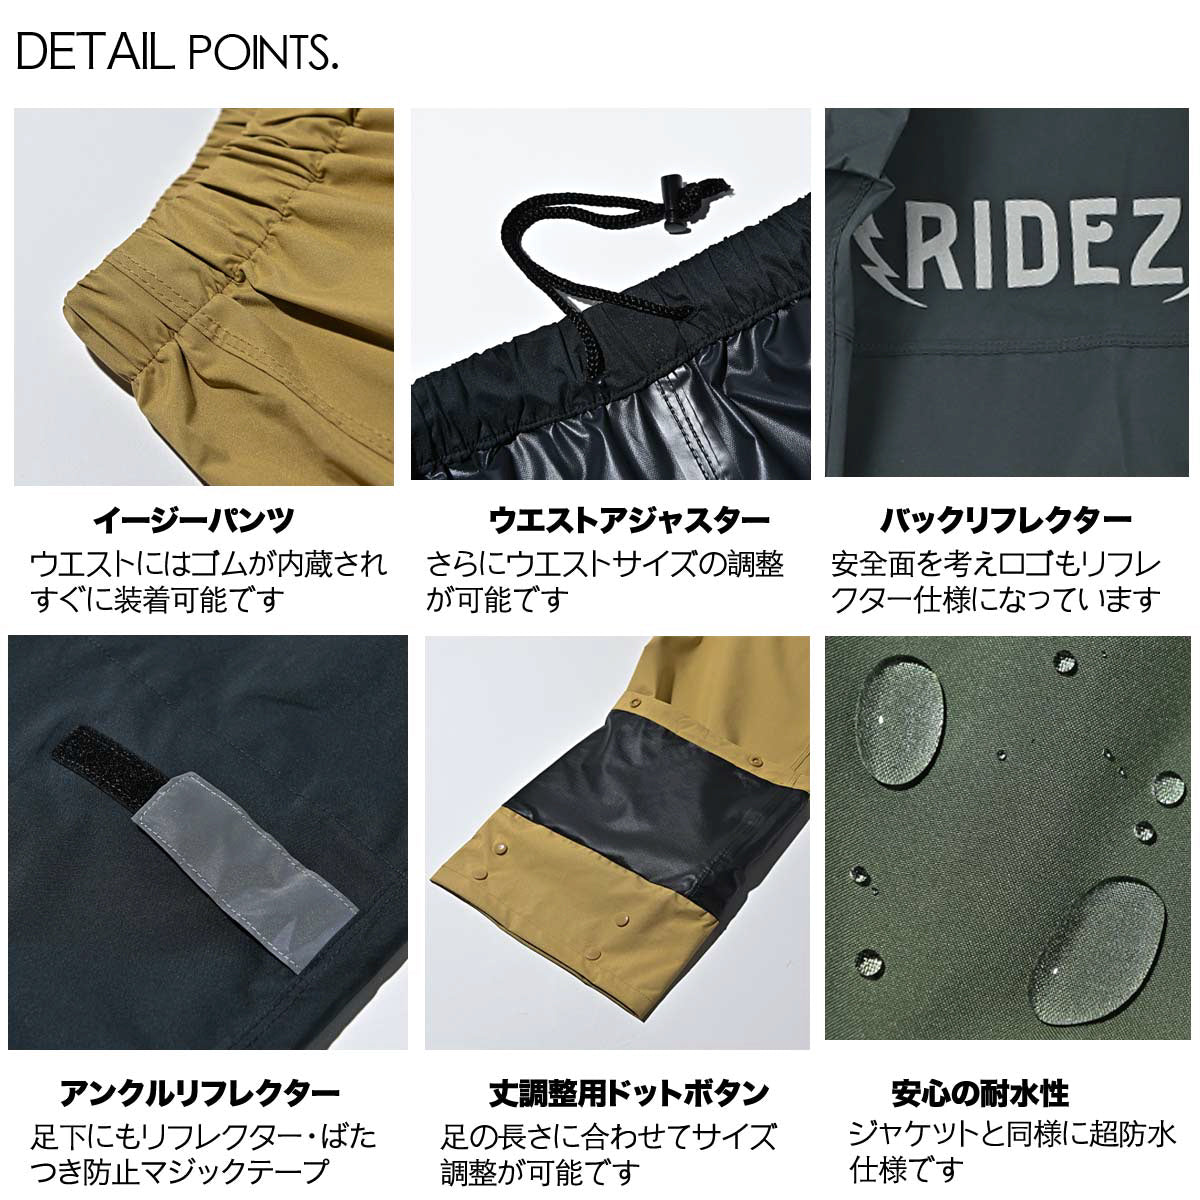 RIDEZ 摩托车雨裤 MICRO RAINPANTS 黑色 MCR04 